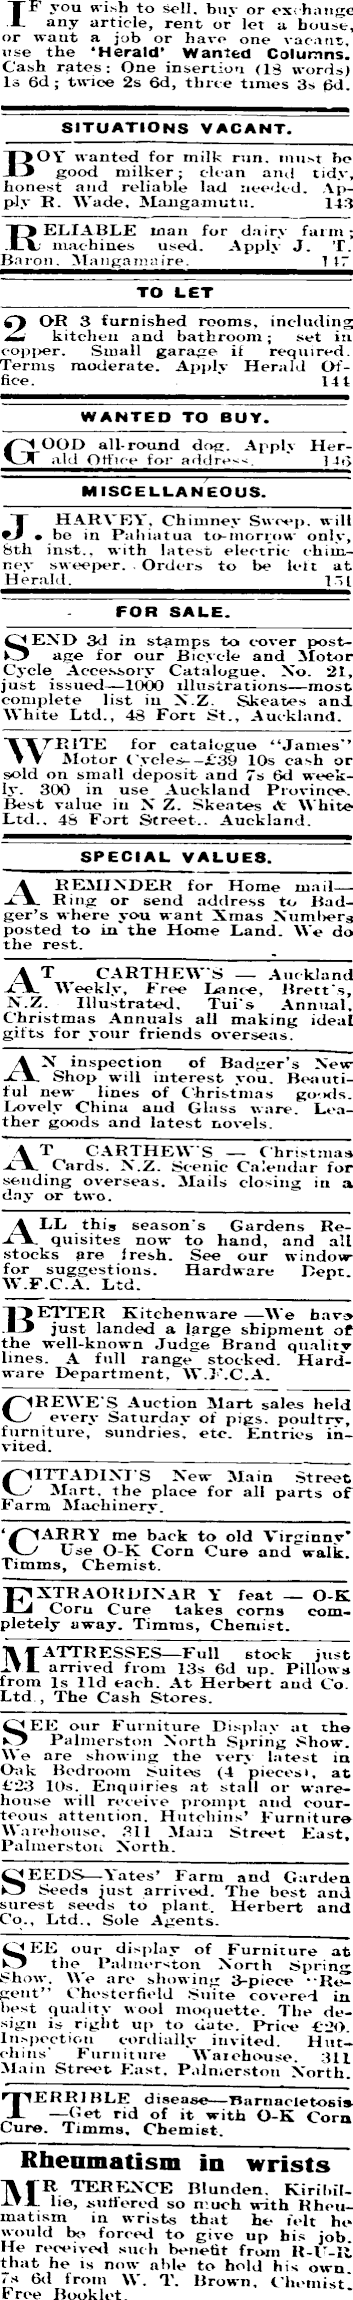 Papers Past Newspapers Pahiatua Herald 7 November 1934 Page 1 Advertisements Column 6